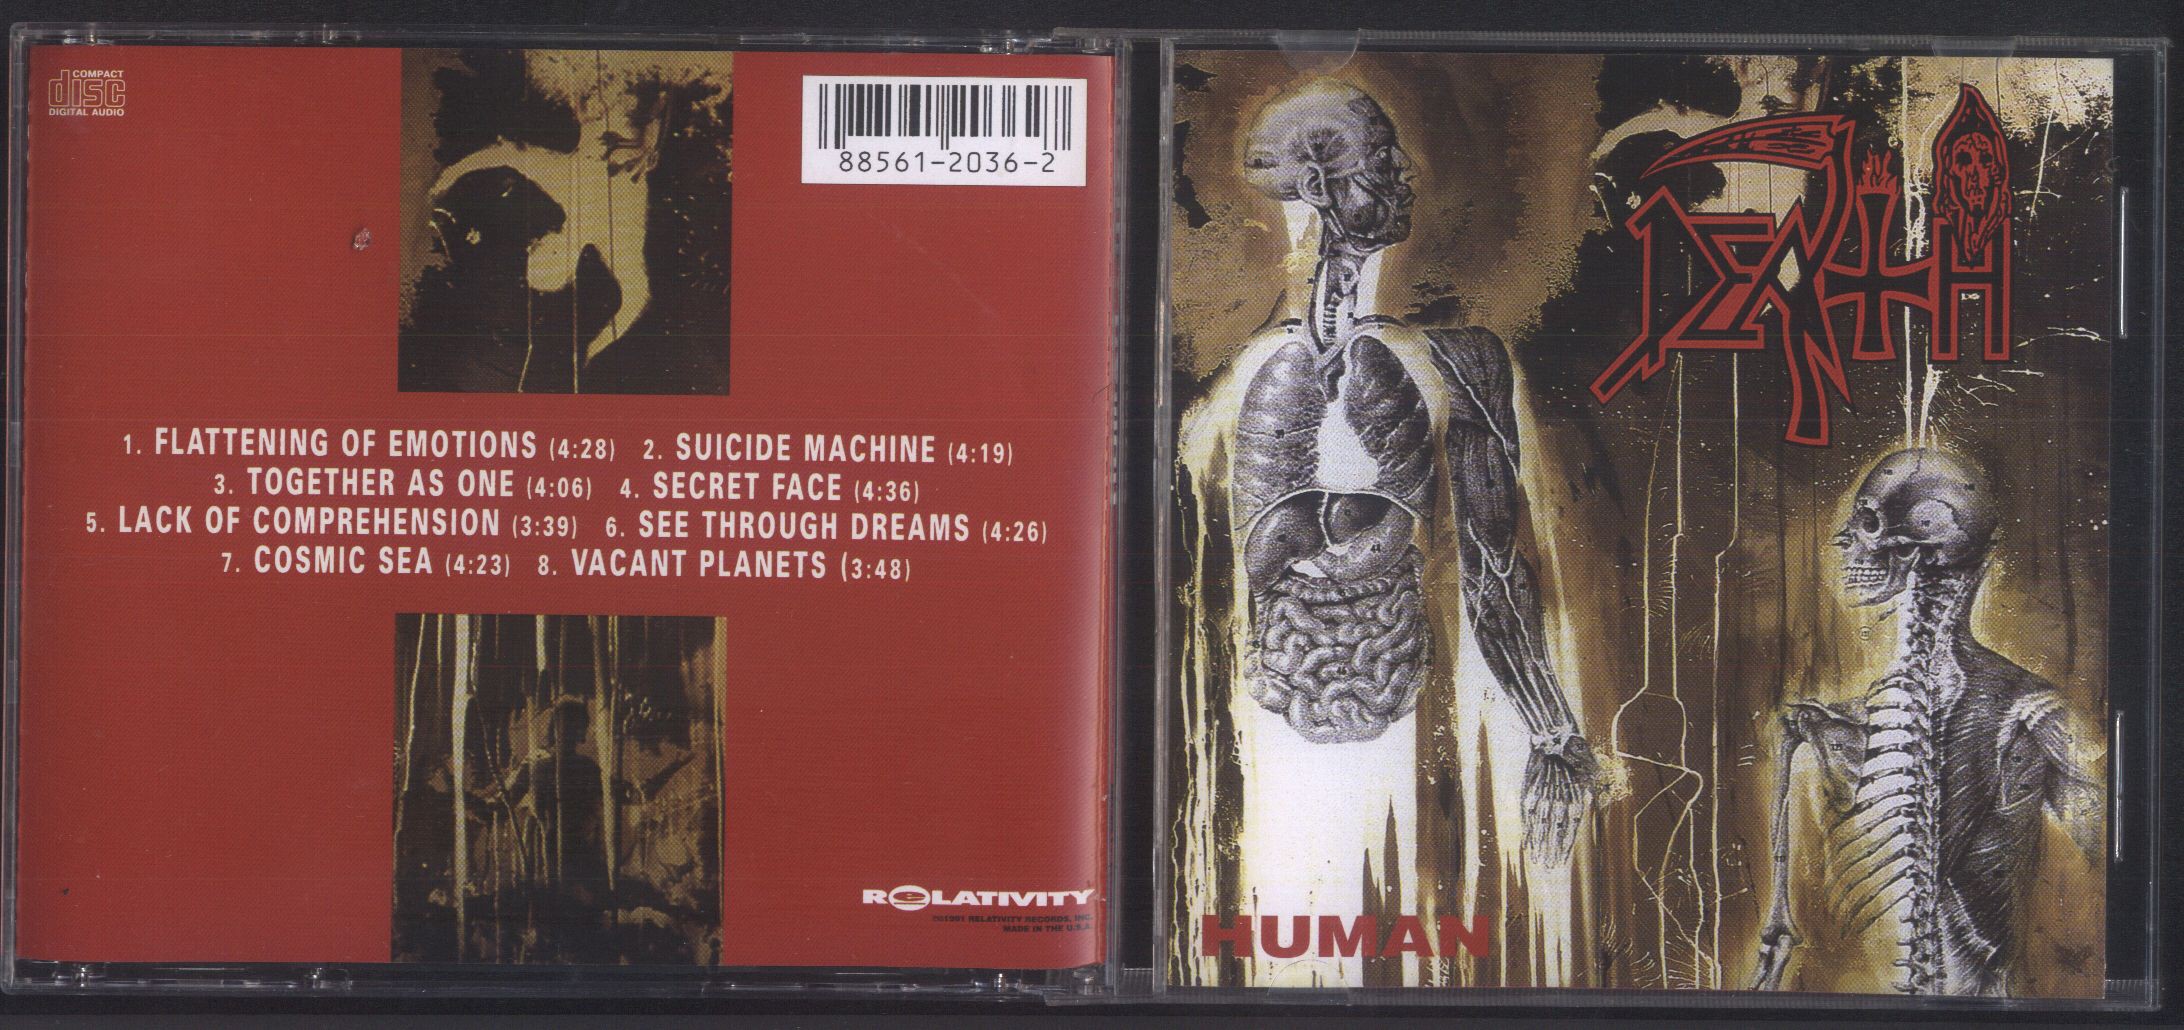 Human death. Death группа Human альбом 1991.